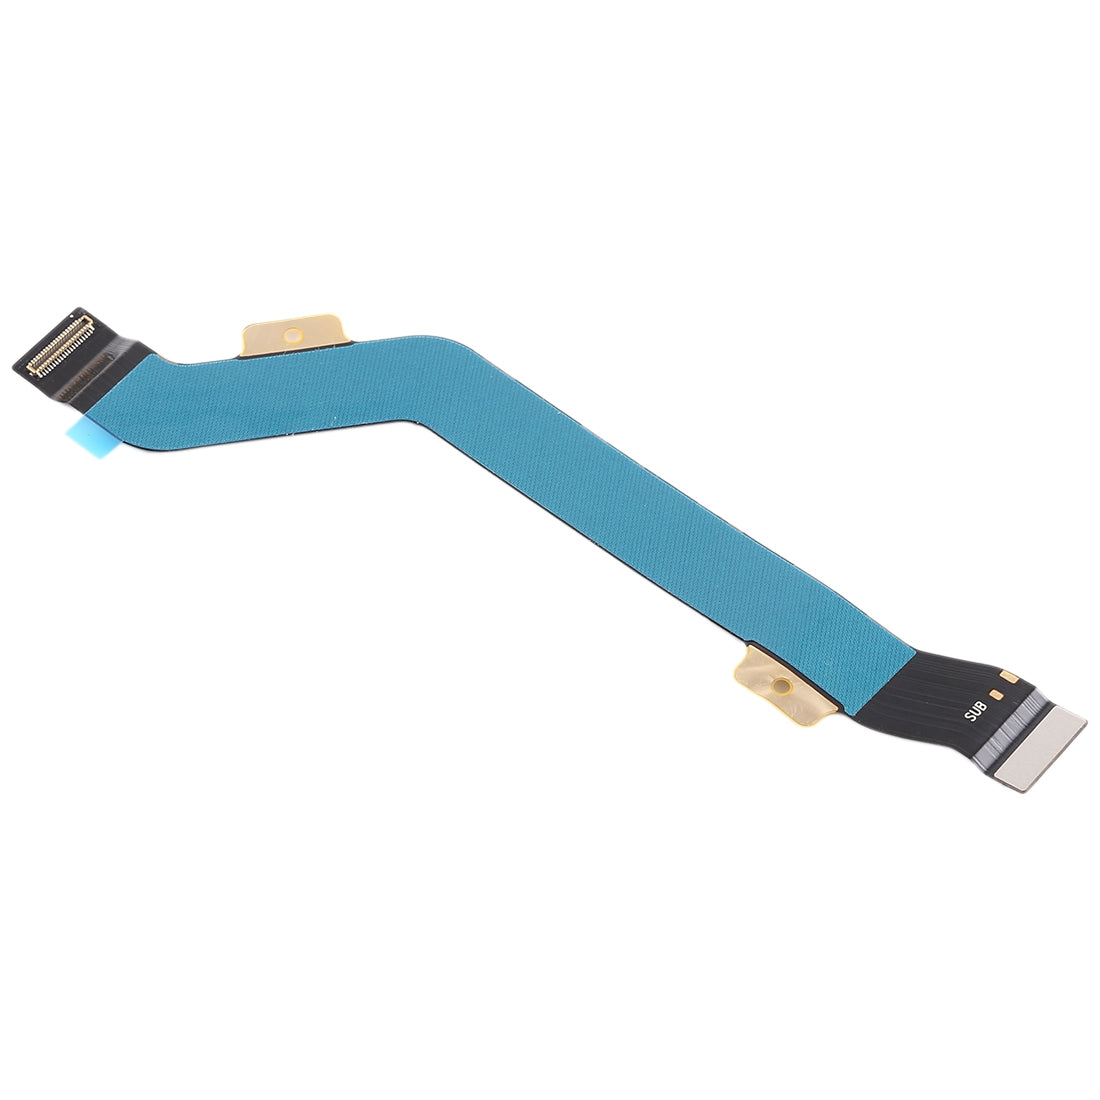 Board Connector Flex Cable Xiaomi Mi 6X / A2